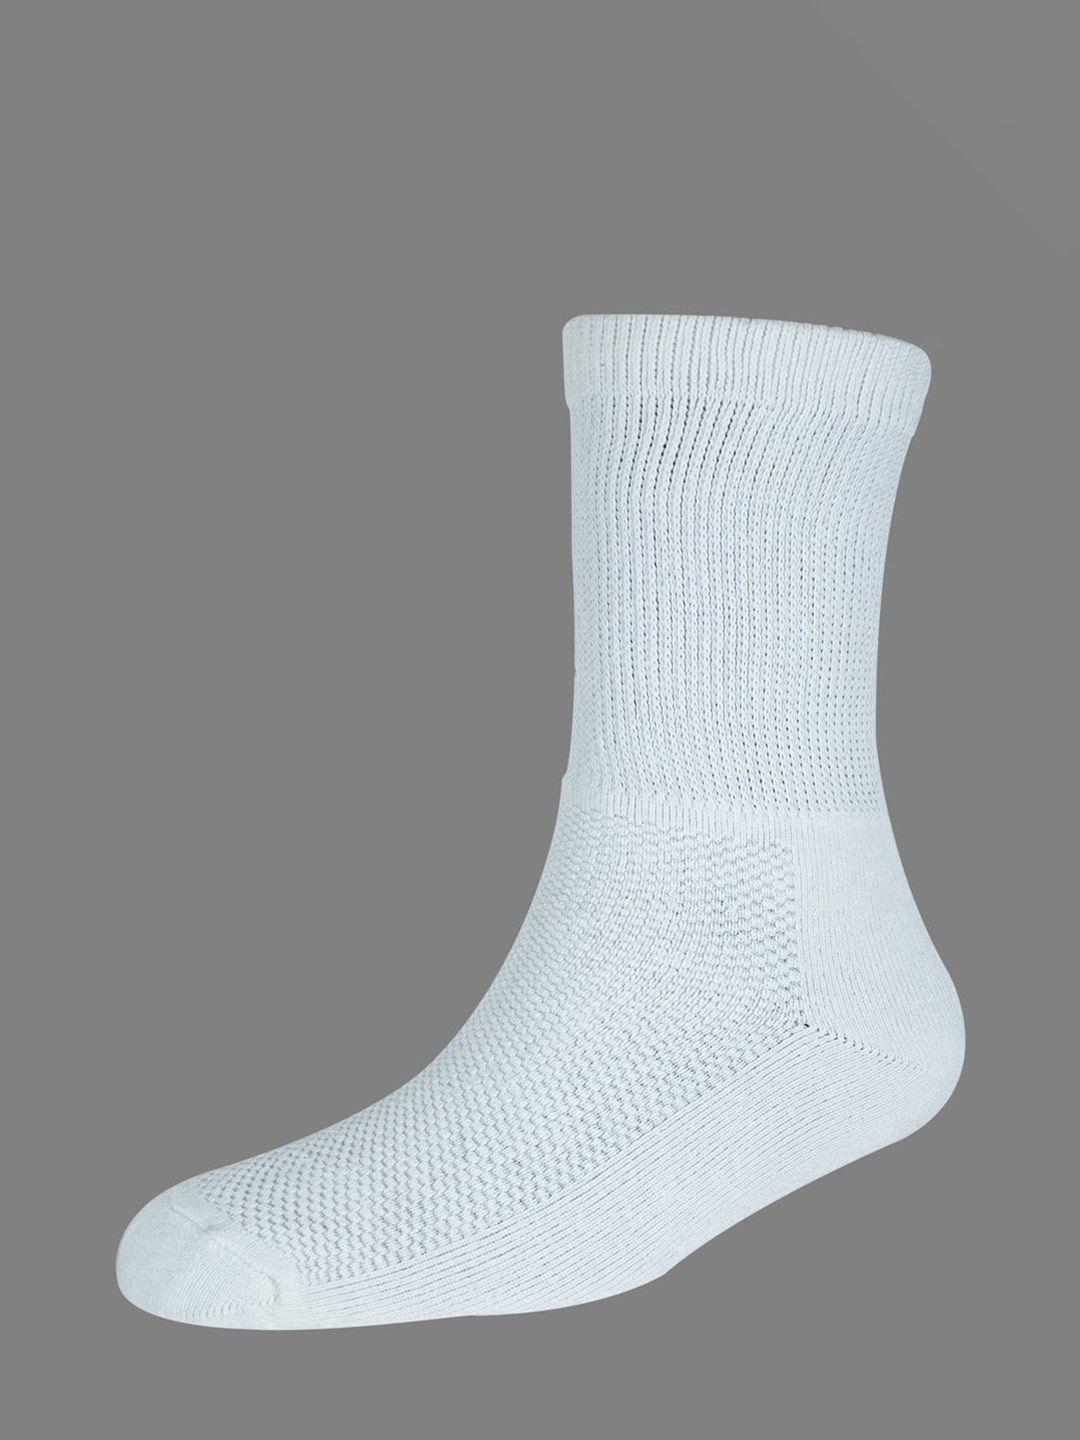 cotstyle men anti-bacterial diabetic ankle-length socks